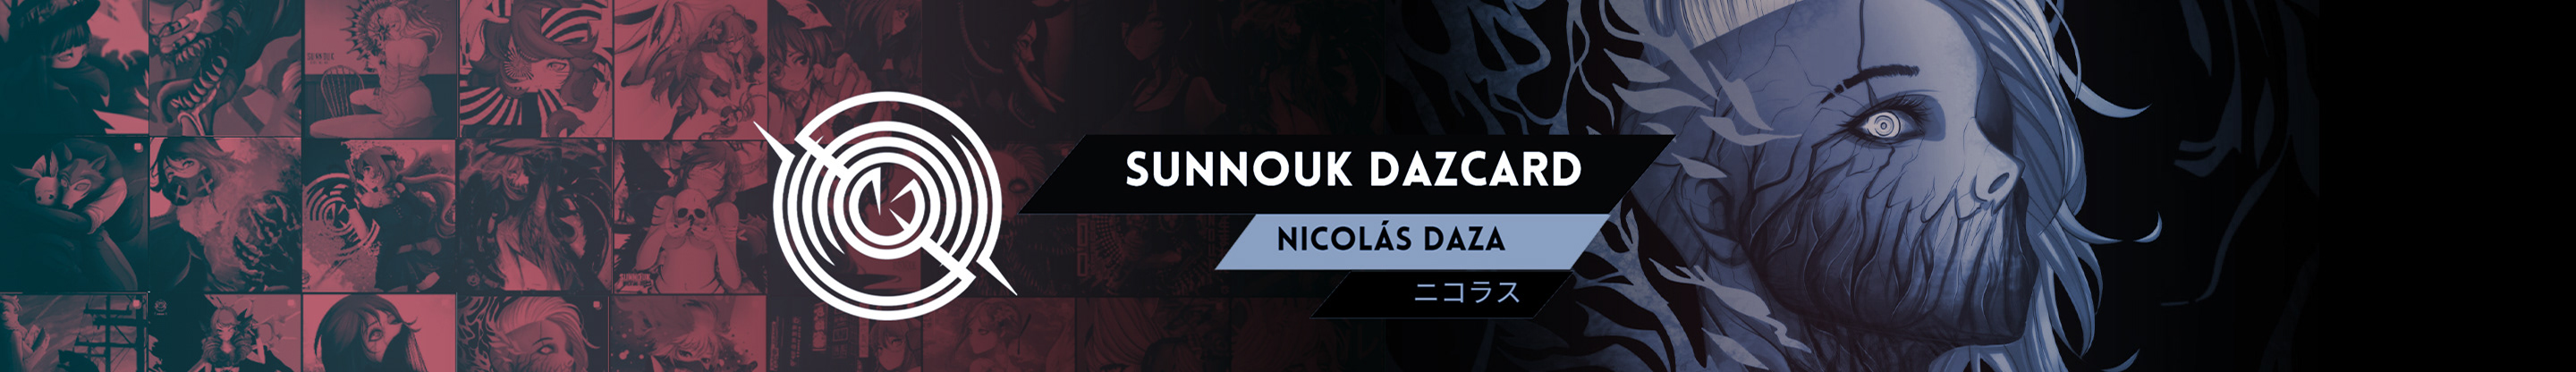 Profielbanner van Nicolás Daza